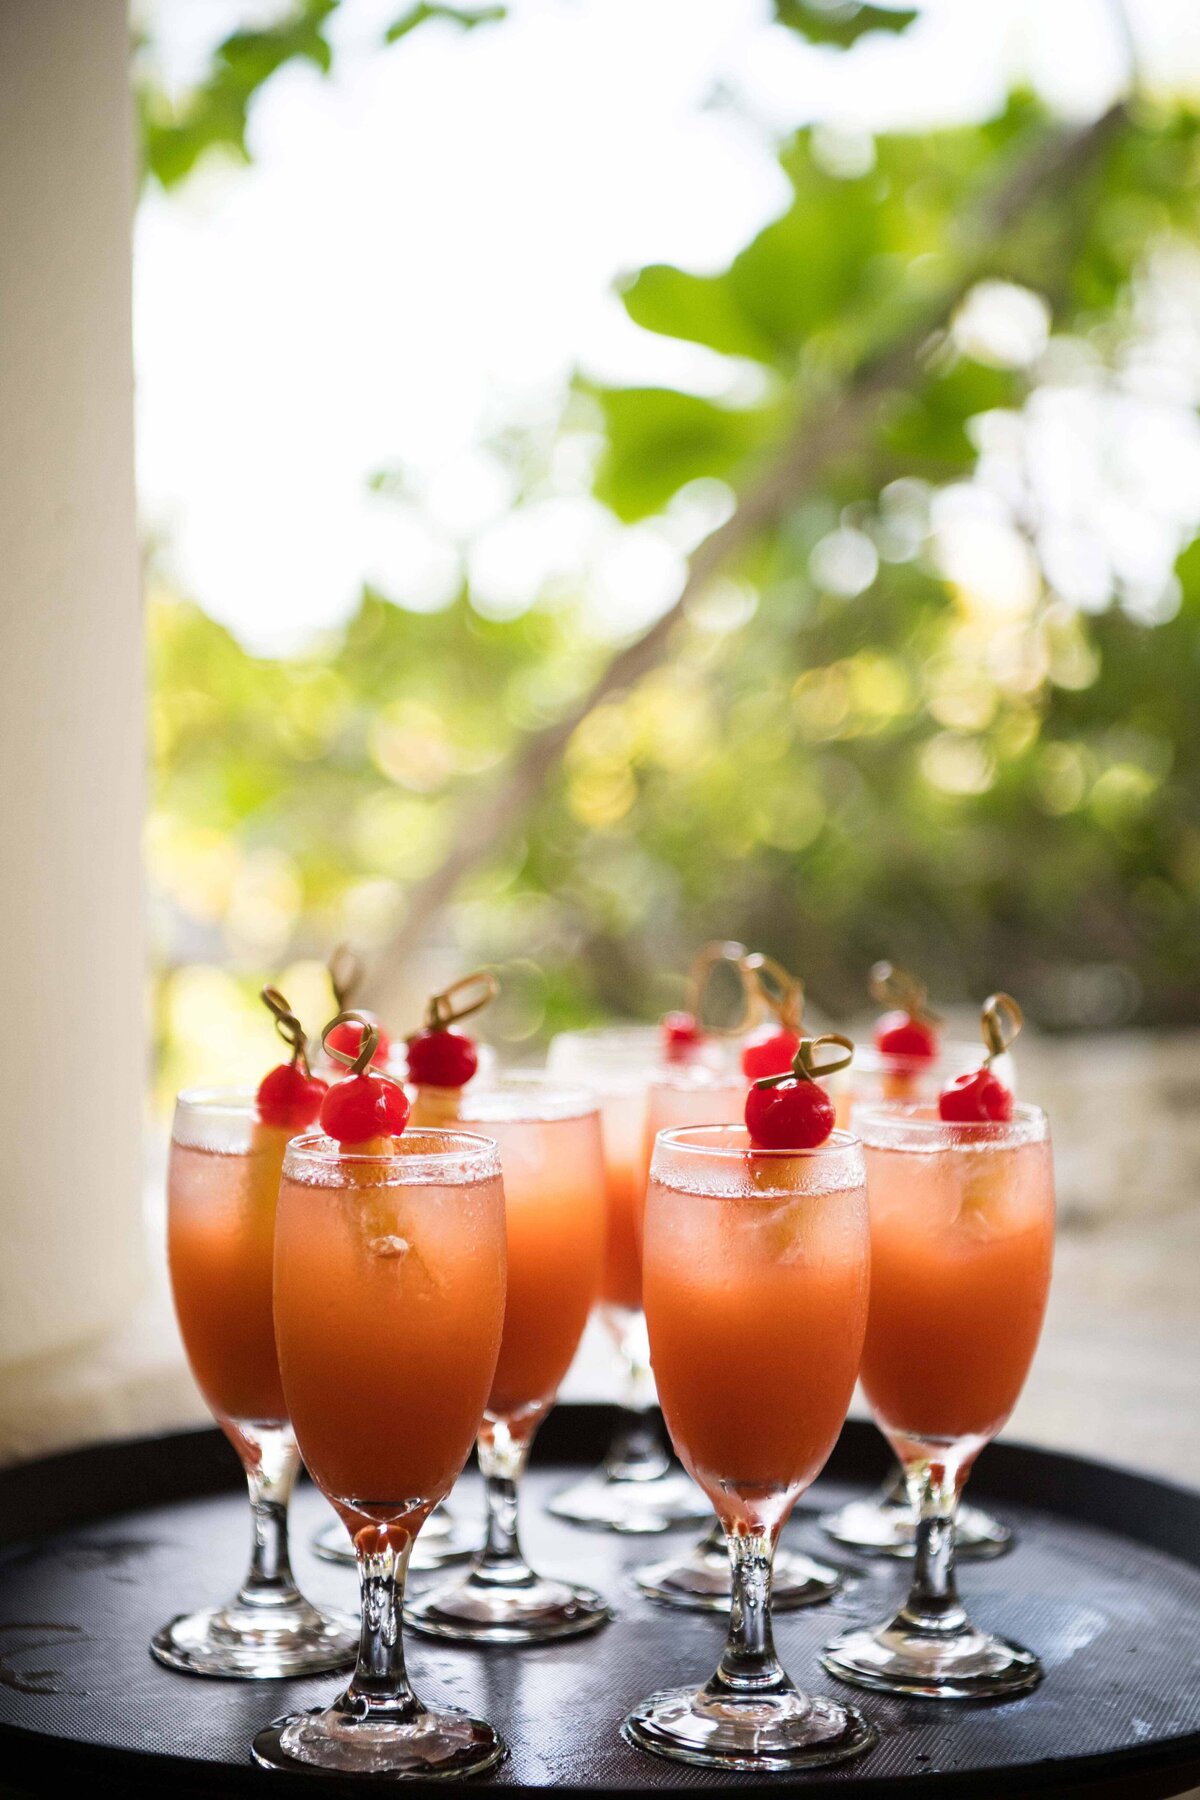 Cocktails on serving platter at tropical destination corporate event